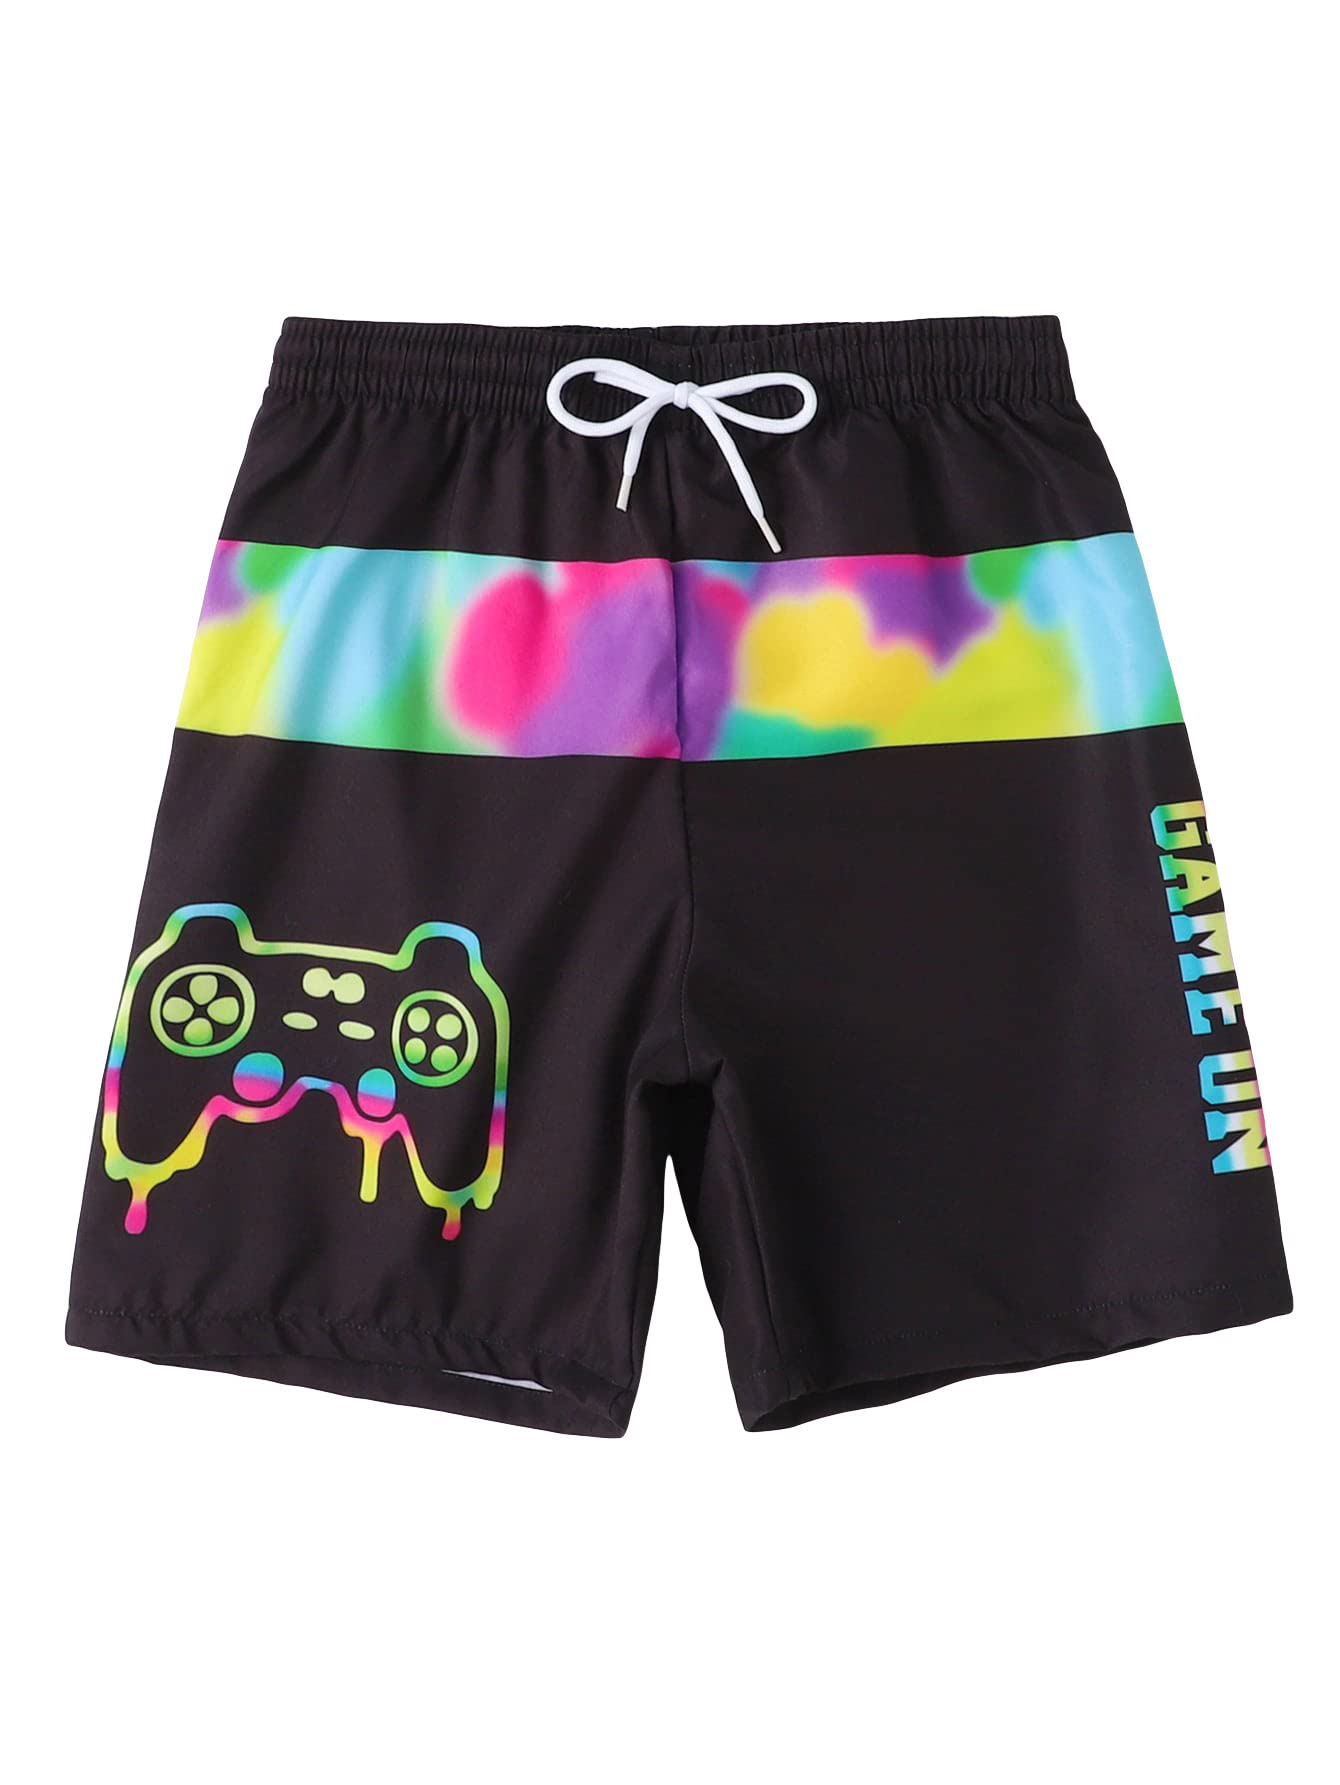 SOLY HUX Boy's Swim Trunks Shorts Print Swim Trunks Drawstring Waist Beach Board Shorts Bathing Suits - amzGamess